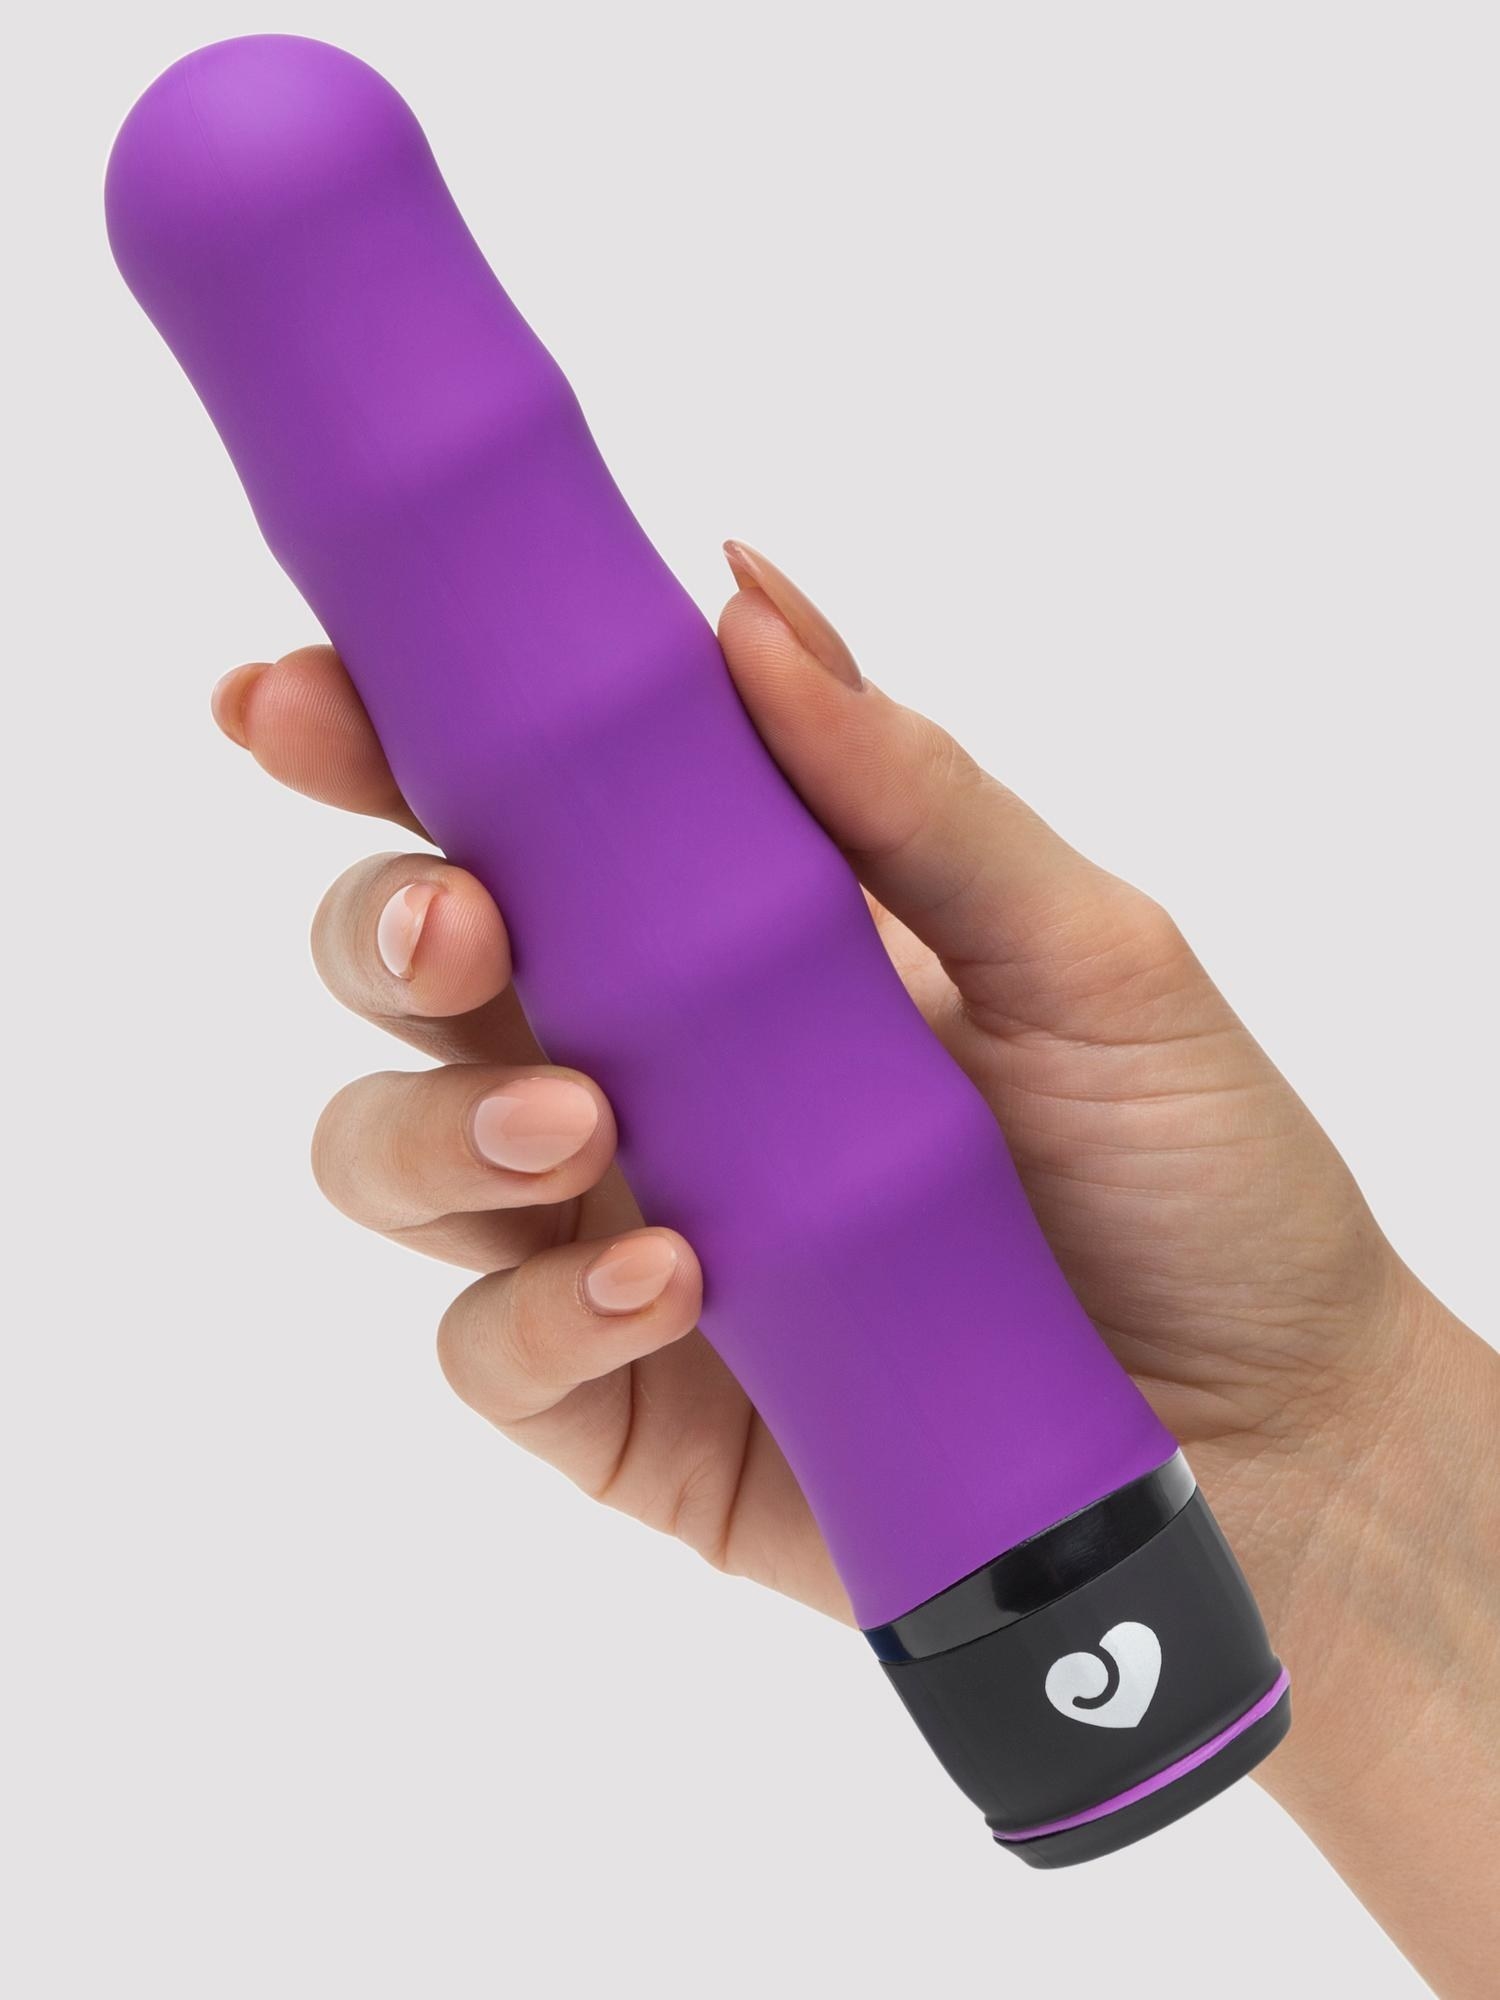 Hand holding the ridged purple vibe